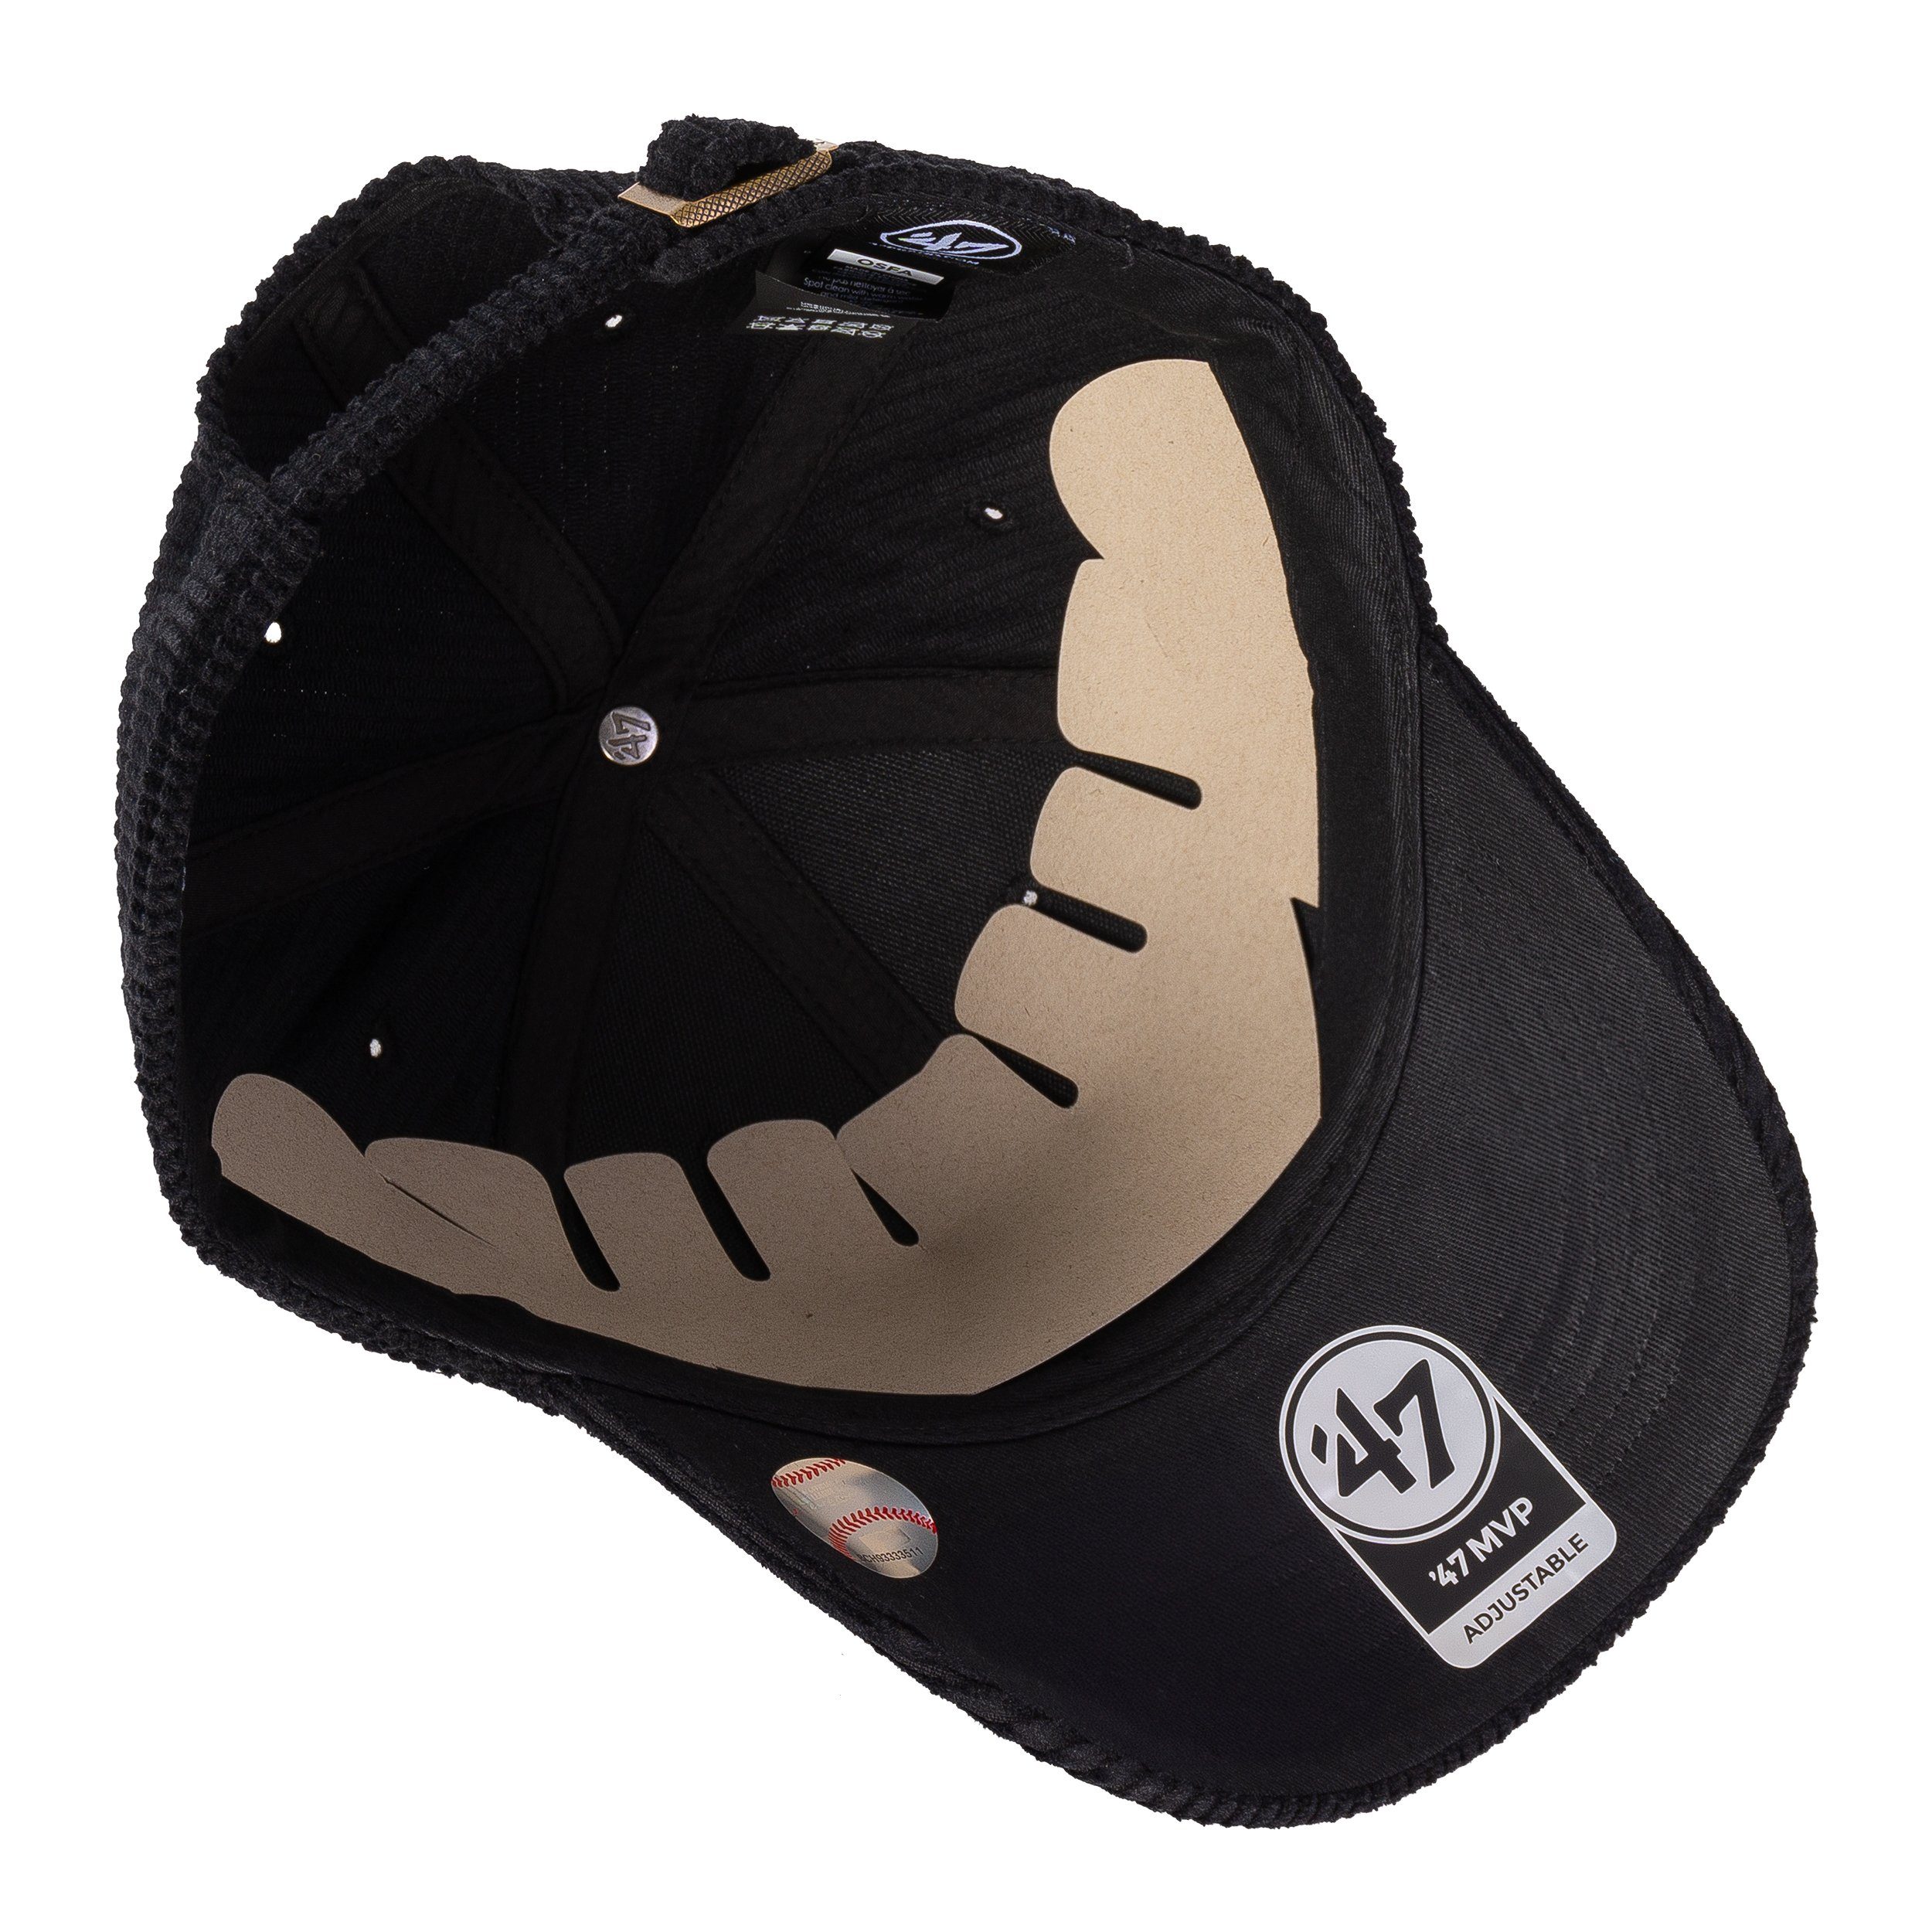 Brand Cap New '47 Cap ´47 York Brand thick schwarz Baseball Yankees Cord